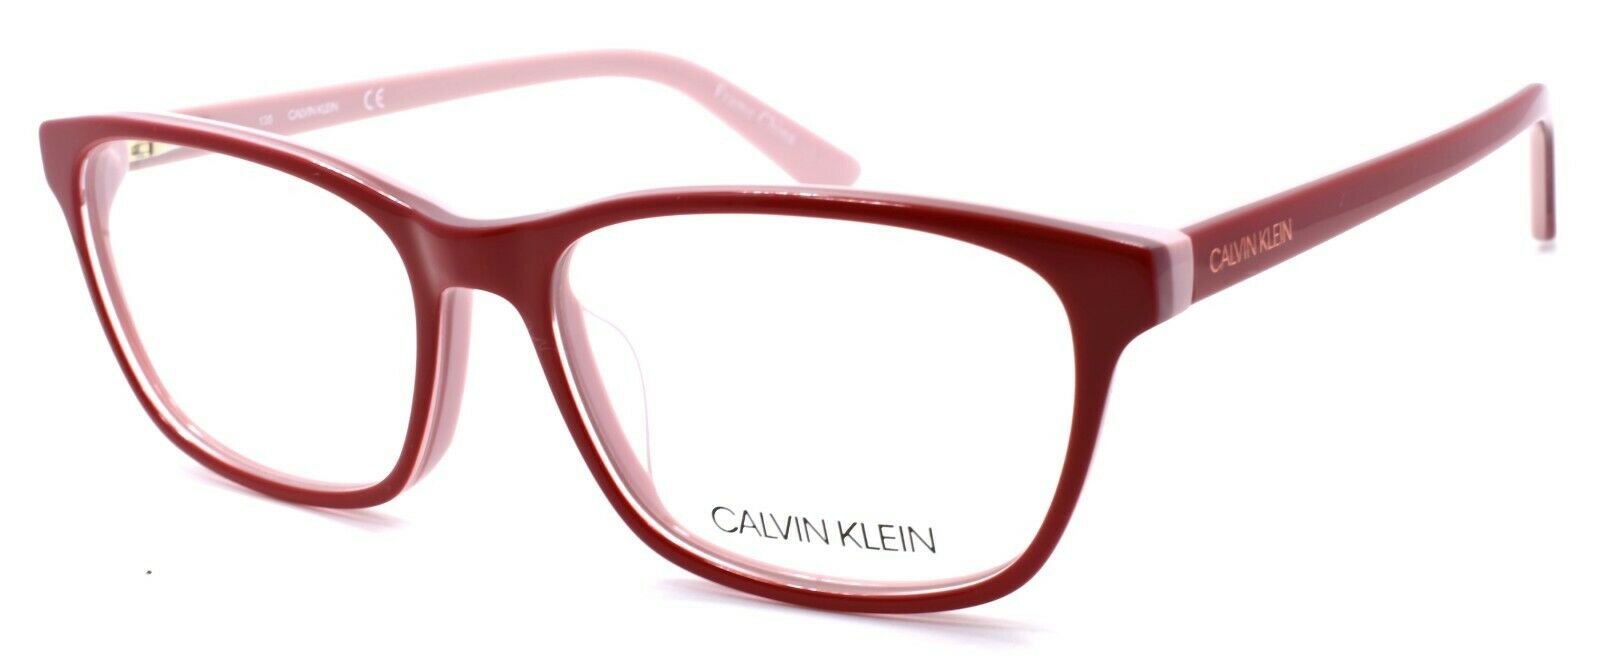 1-Calvin Klein CK18515 610 Women's Eyeglasses Frames 51-15-135 Red / Blush-883901100822-IKSpecs